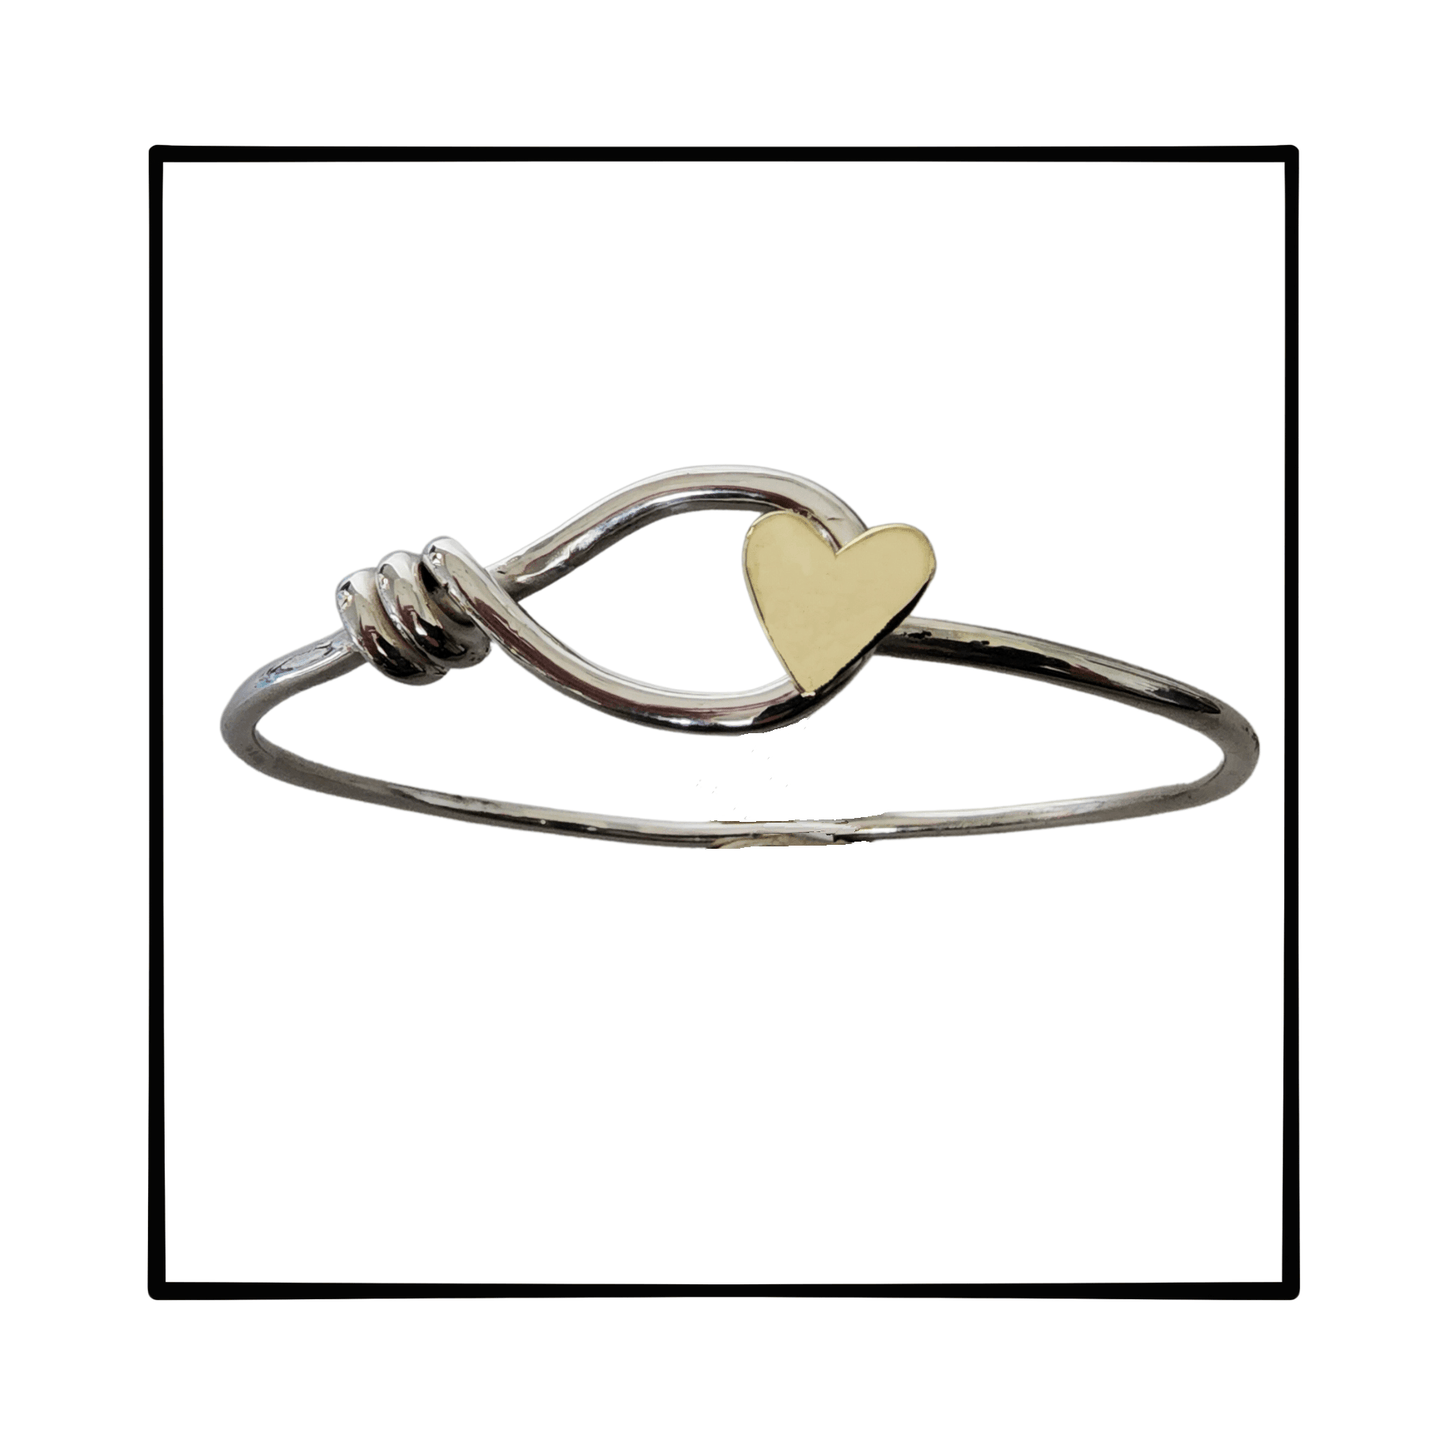 Handmade Sterling Silver and Brass Heart Bangle Bracelet - Gilded Heart Designs